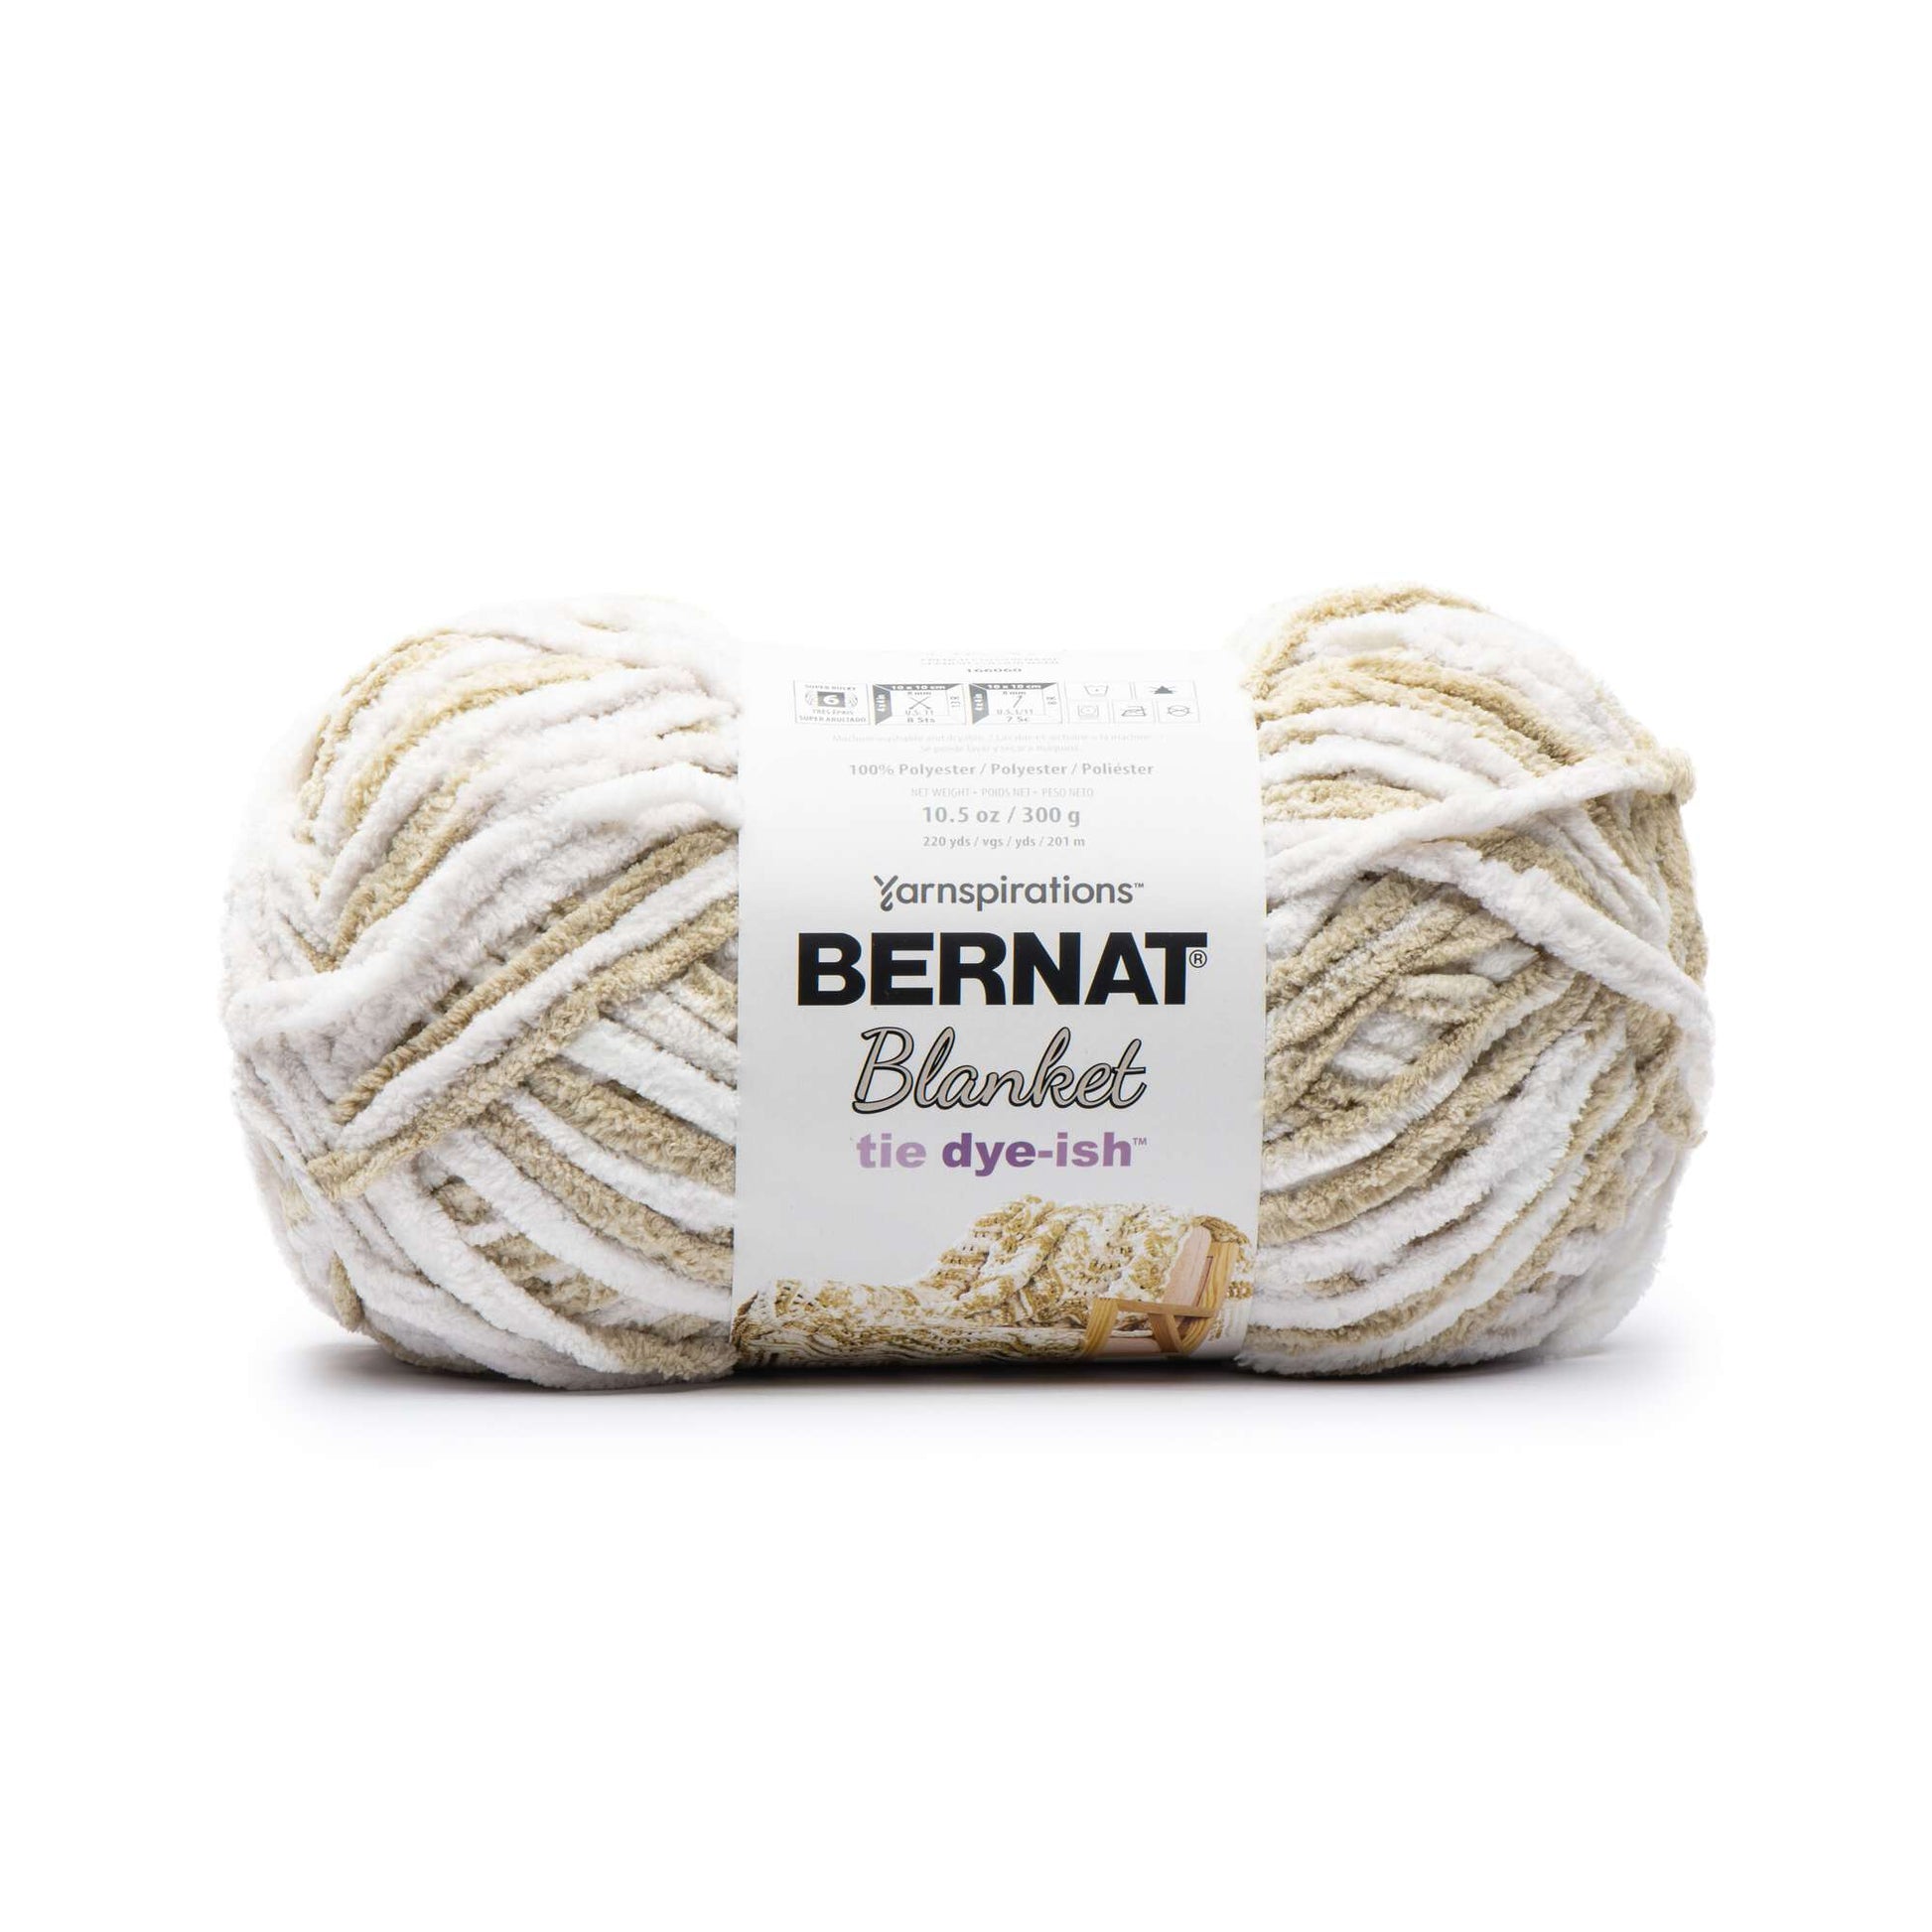 Bernat Blanket Tie Dye-ish Yarn (300g/10.5oz), Yarnspirations